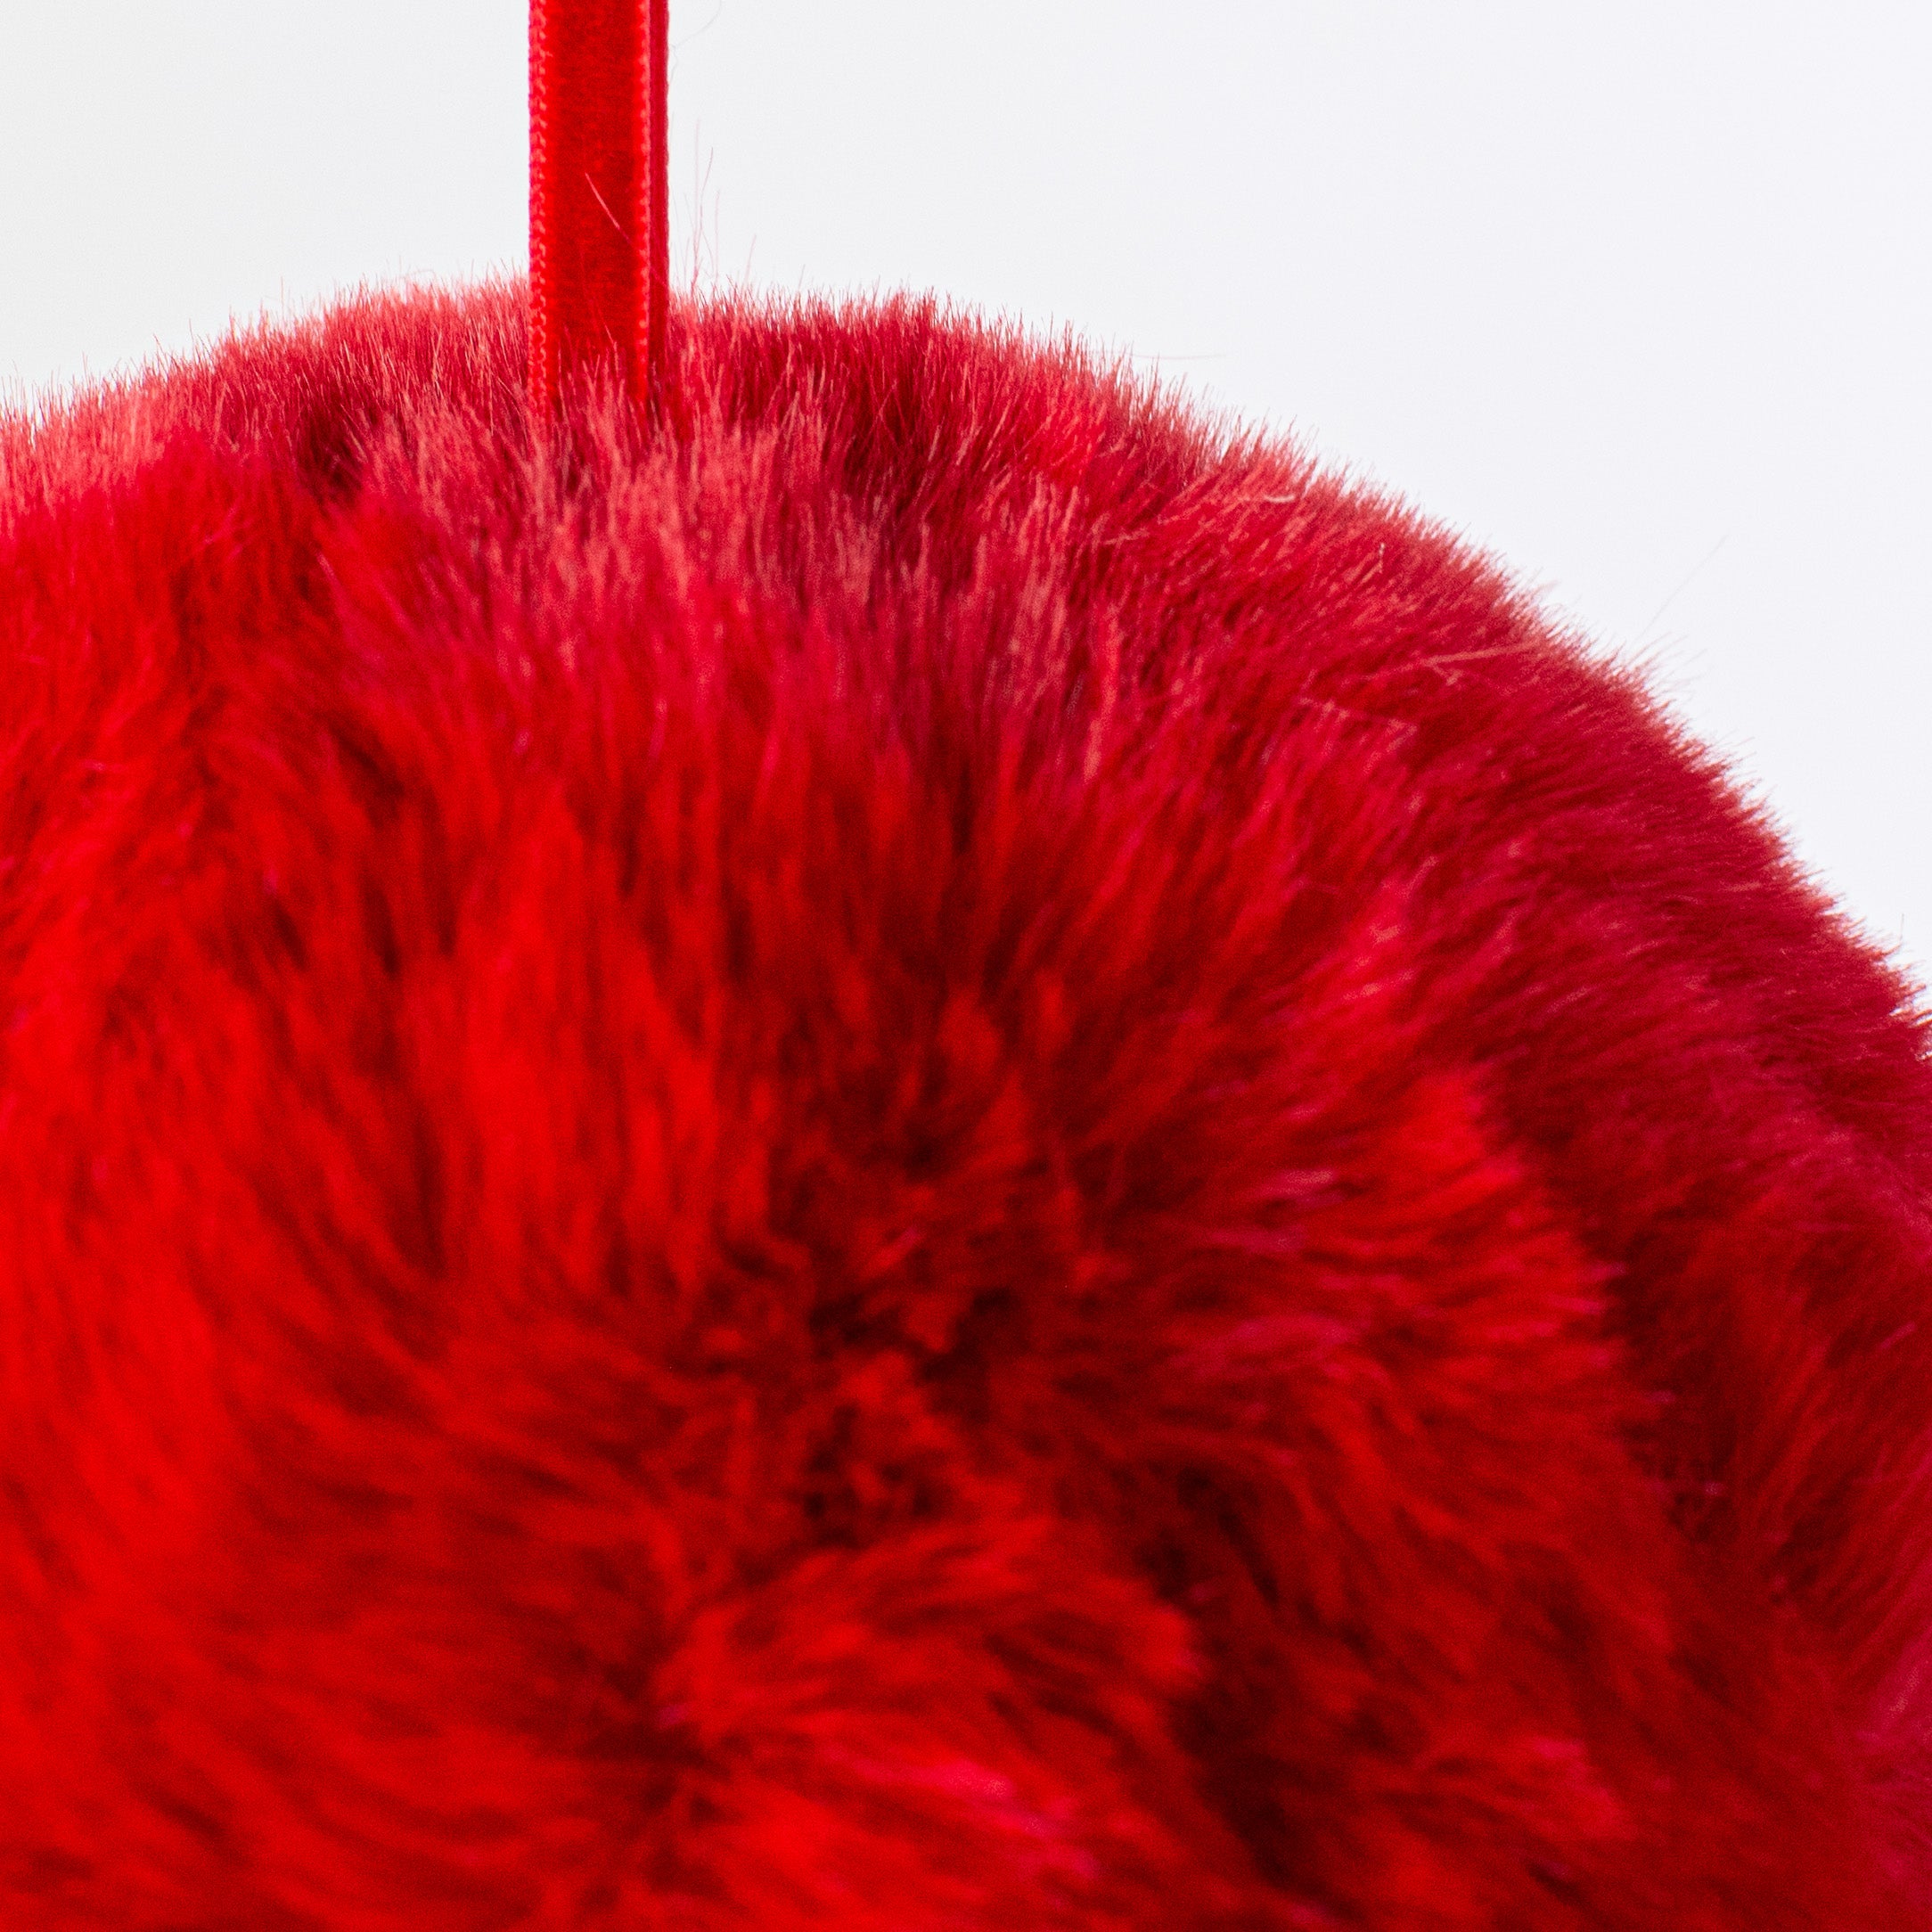 6" Faux Fur Ornament: Red